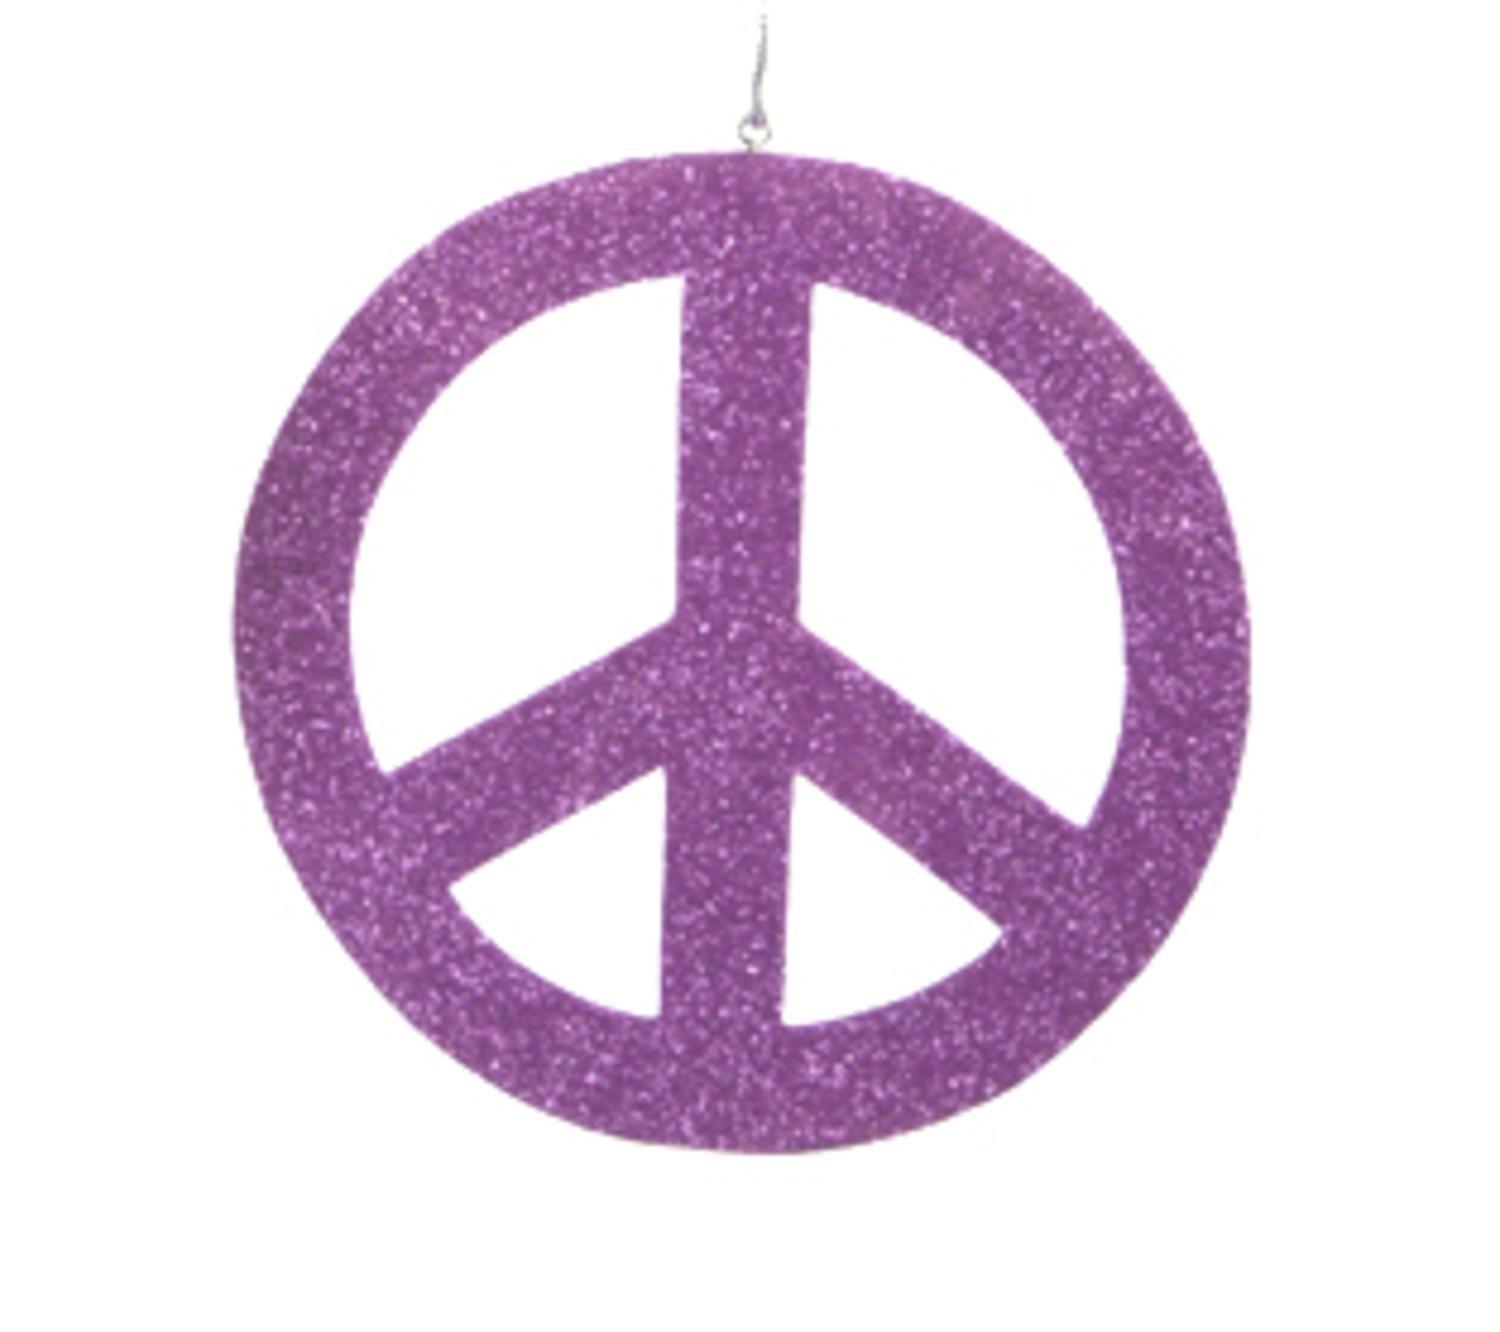 Hippie Peace Sign Logo - Flower Power Purple Glittered Hippie Peace Sign Christmas